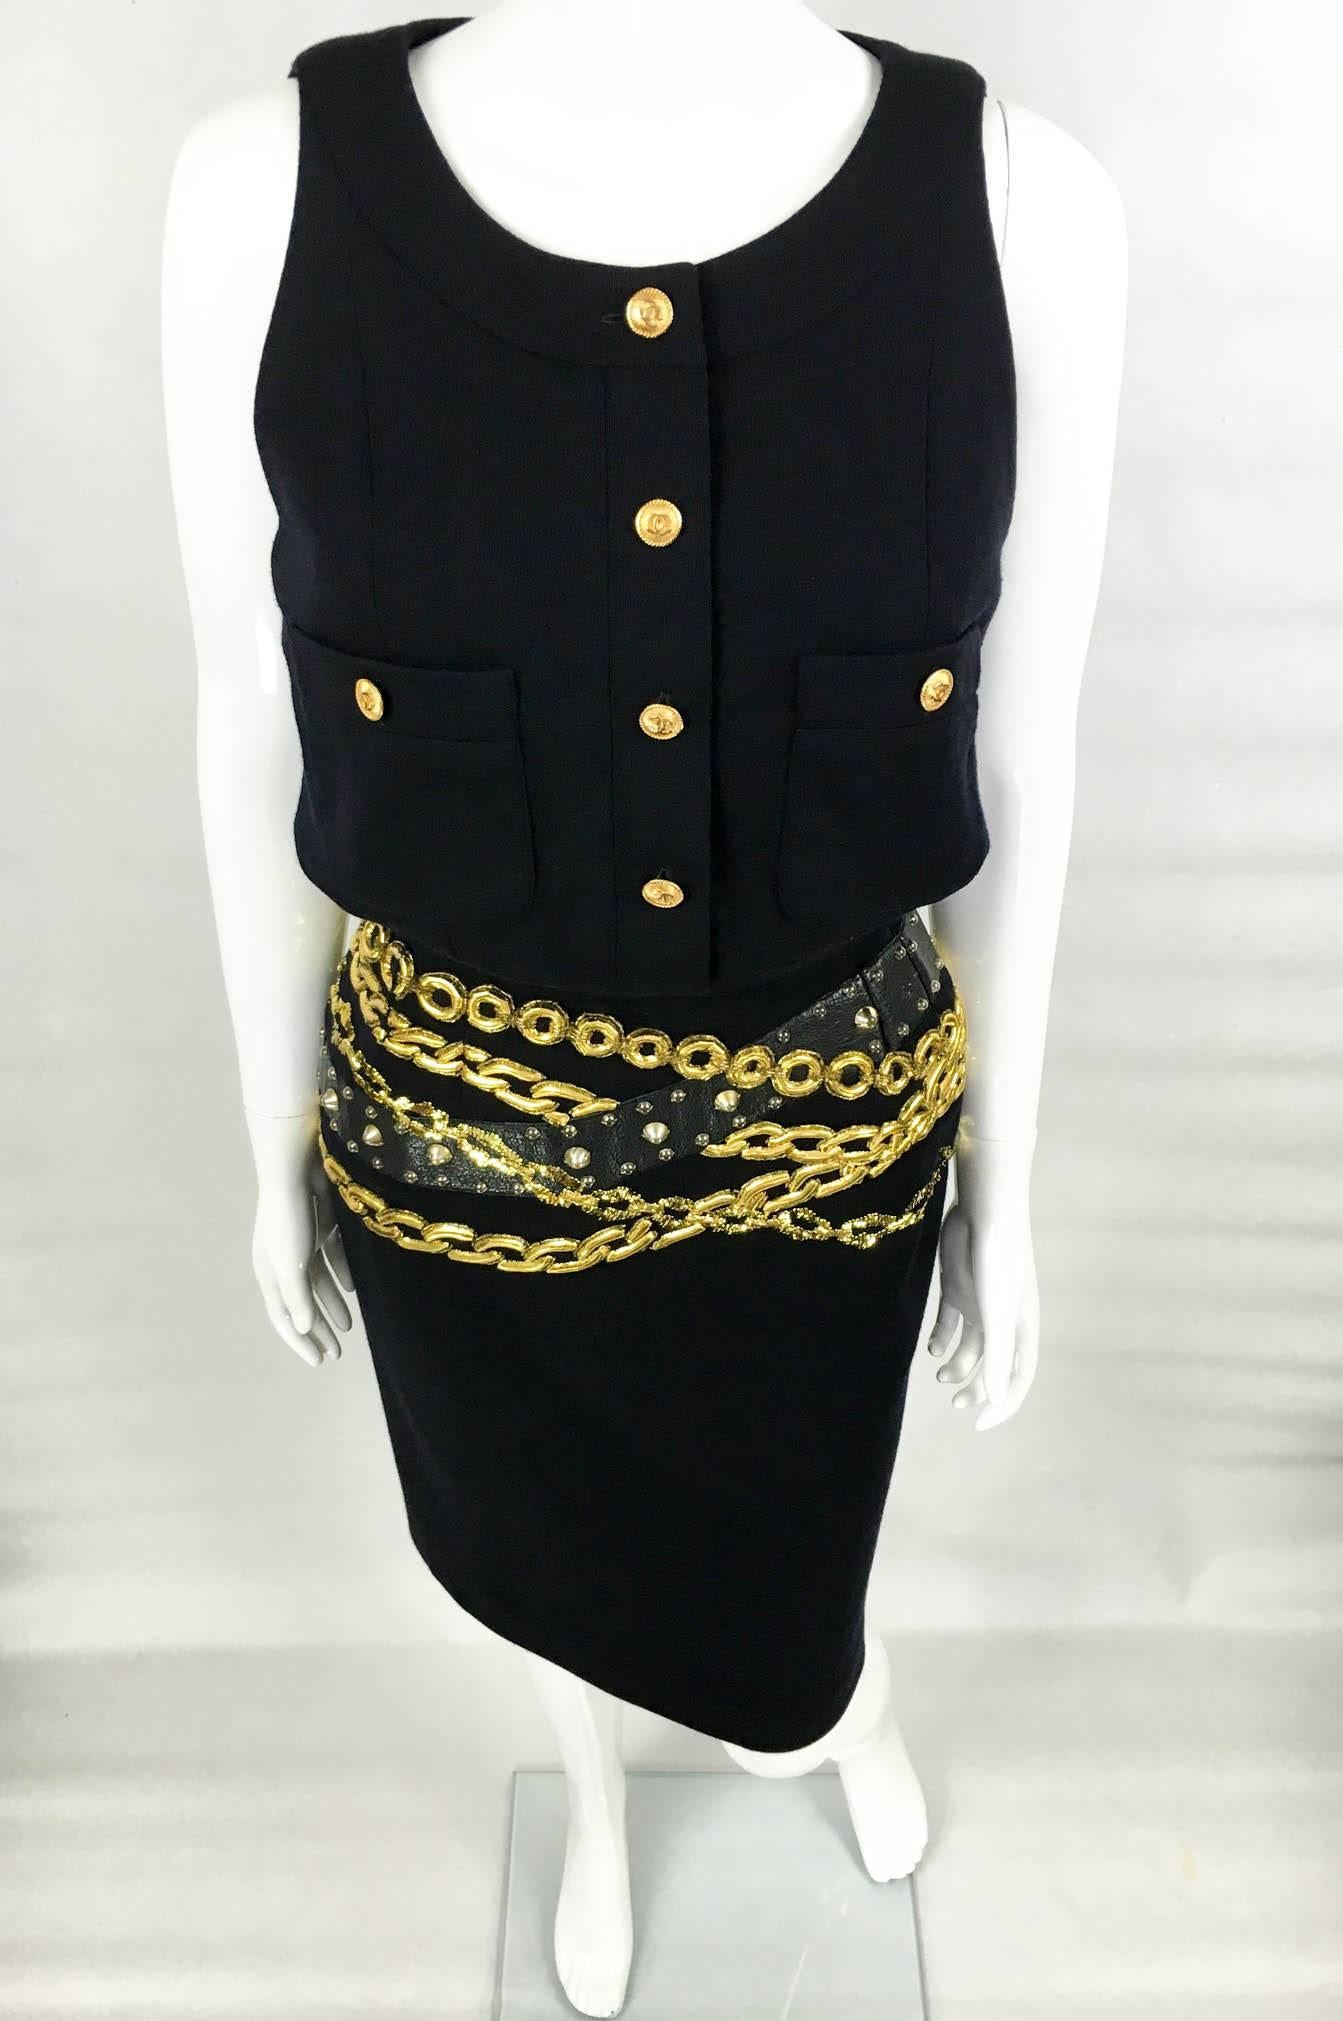 Women's Chanel 'Chain' Wool Black Dress - Circa 1985